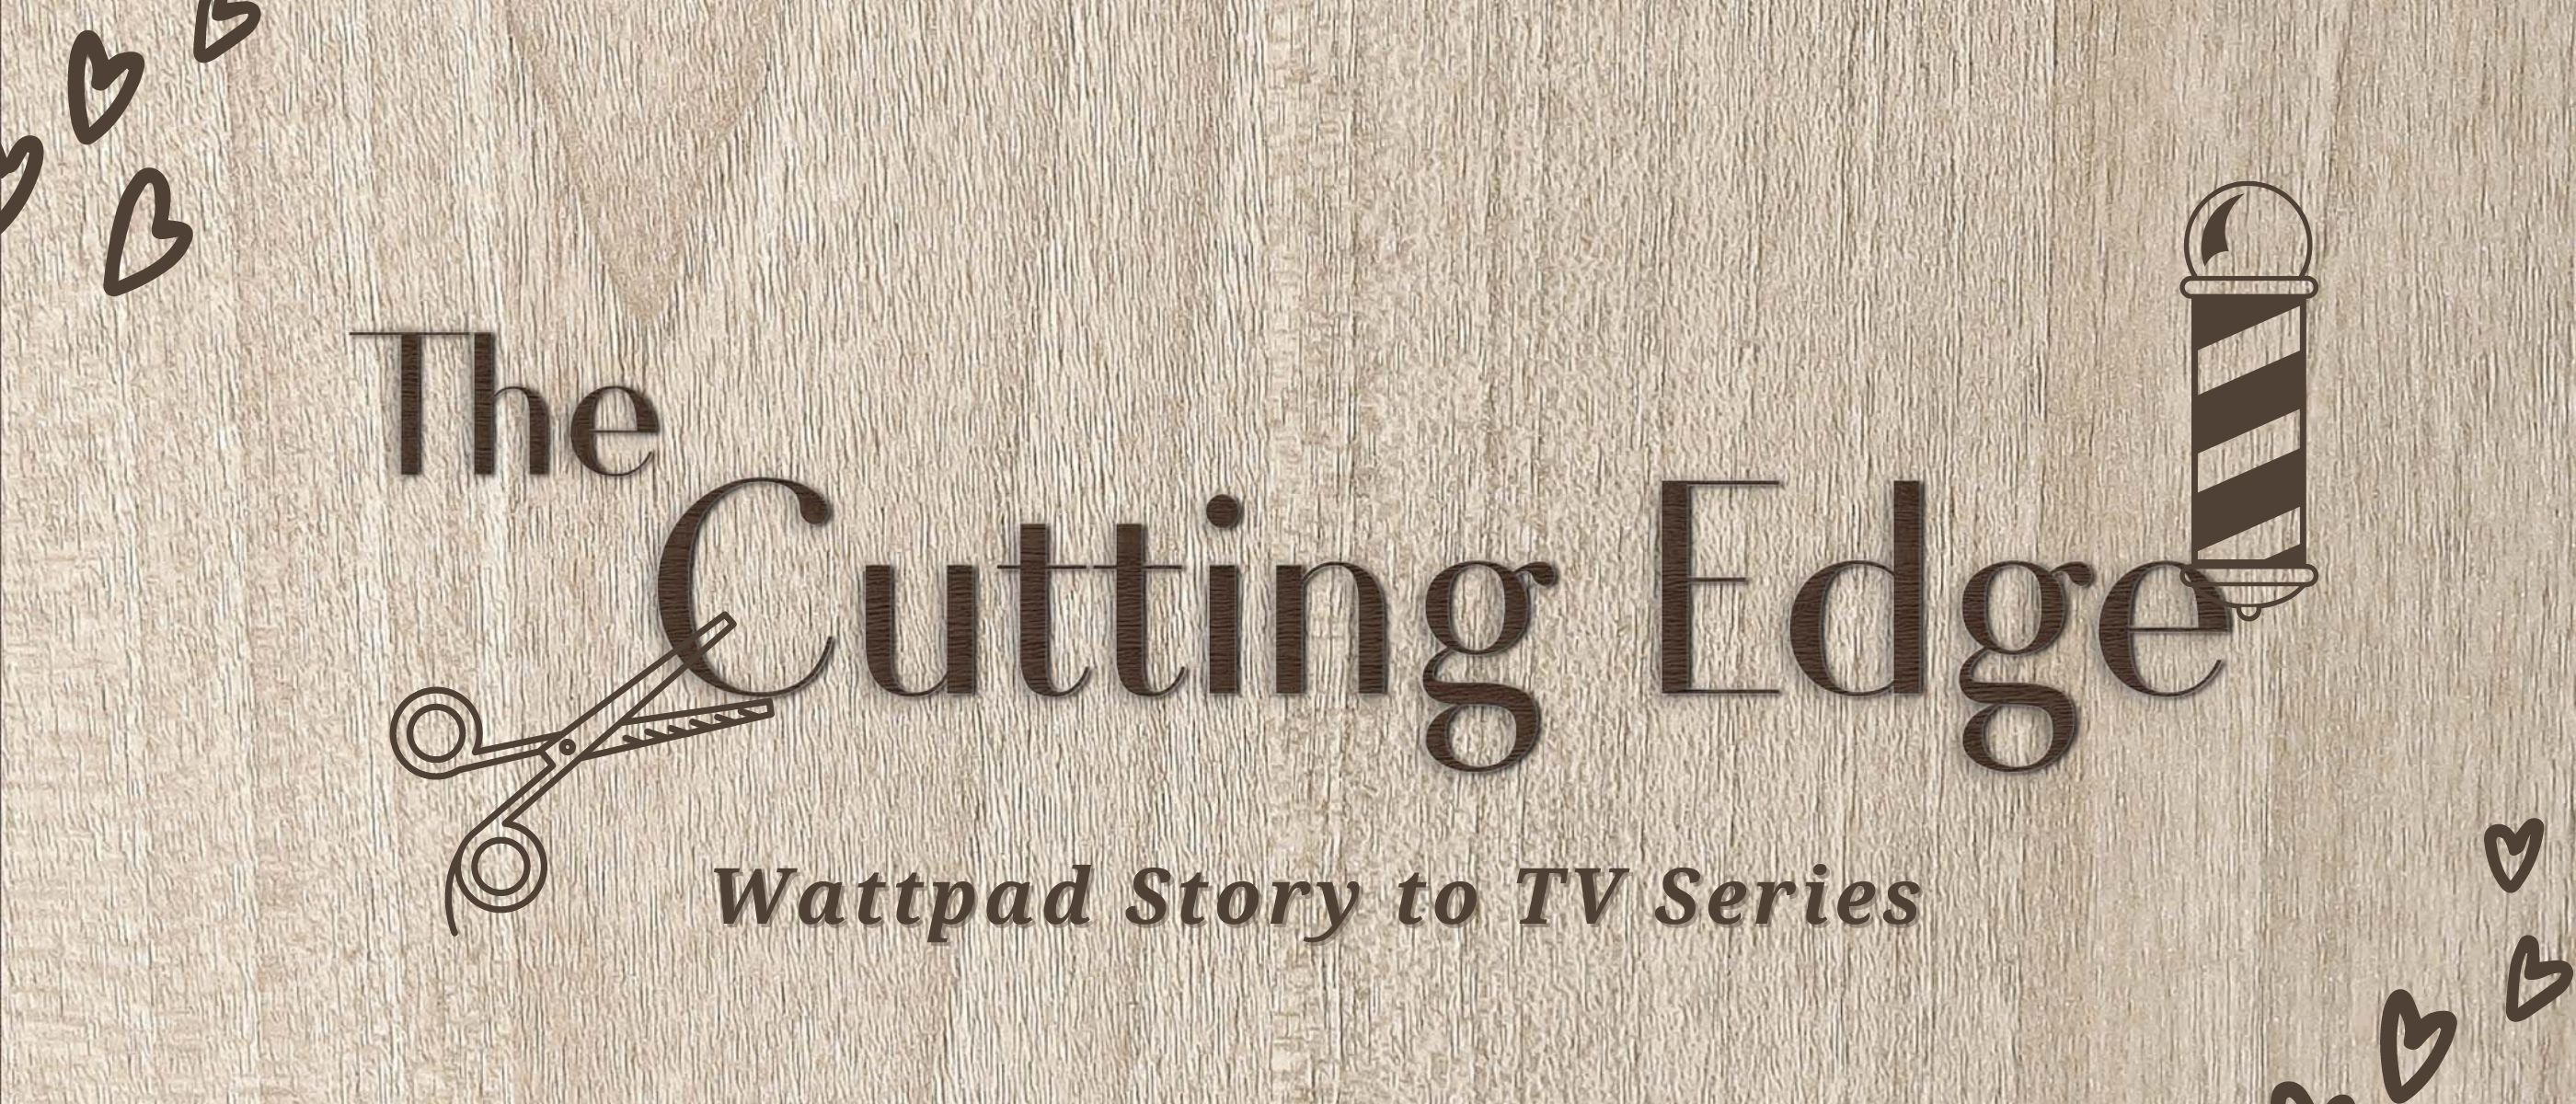 The Cutting Edge: Wattpad story to TV Series